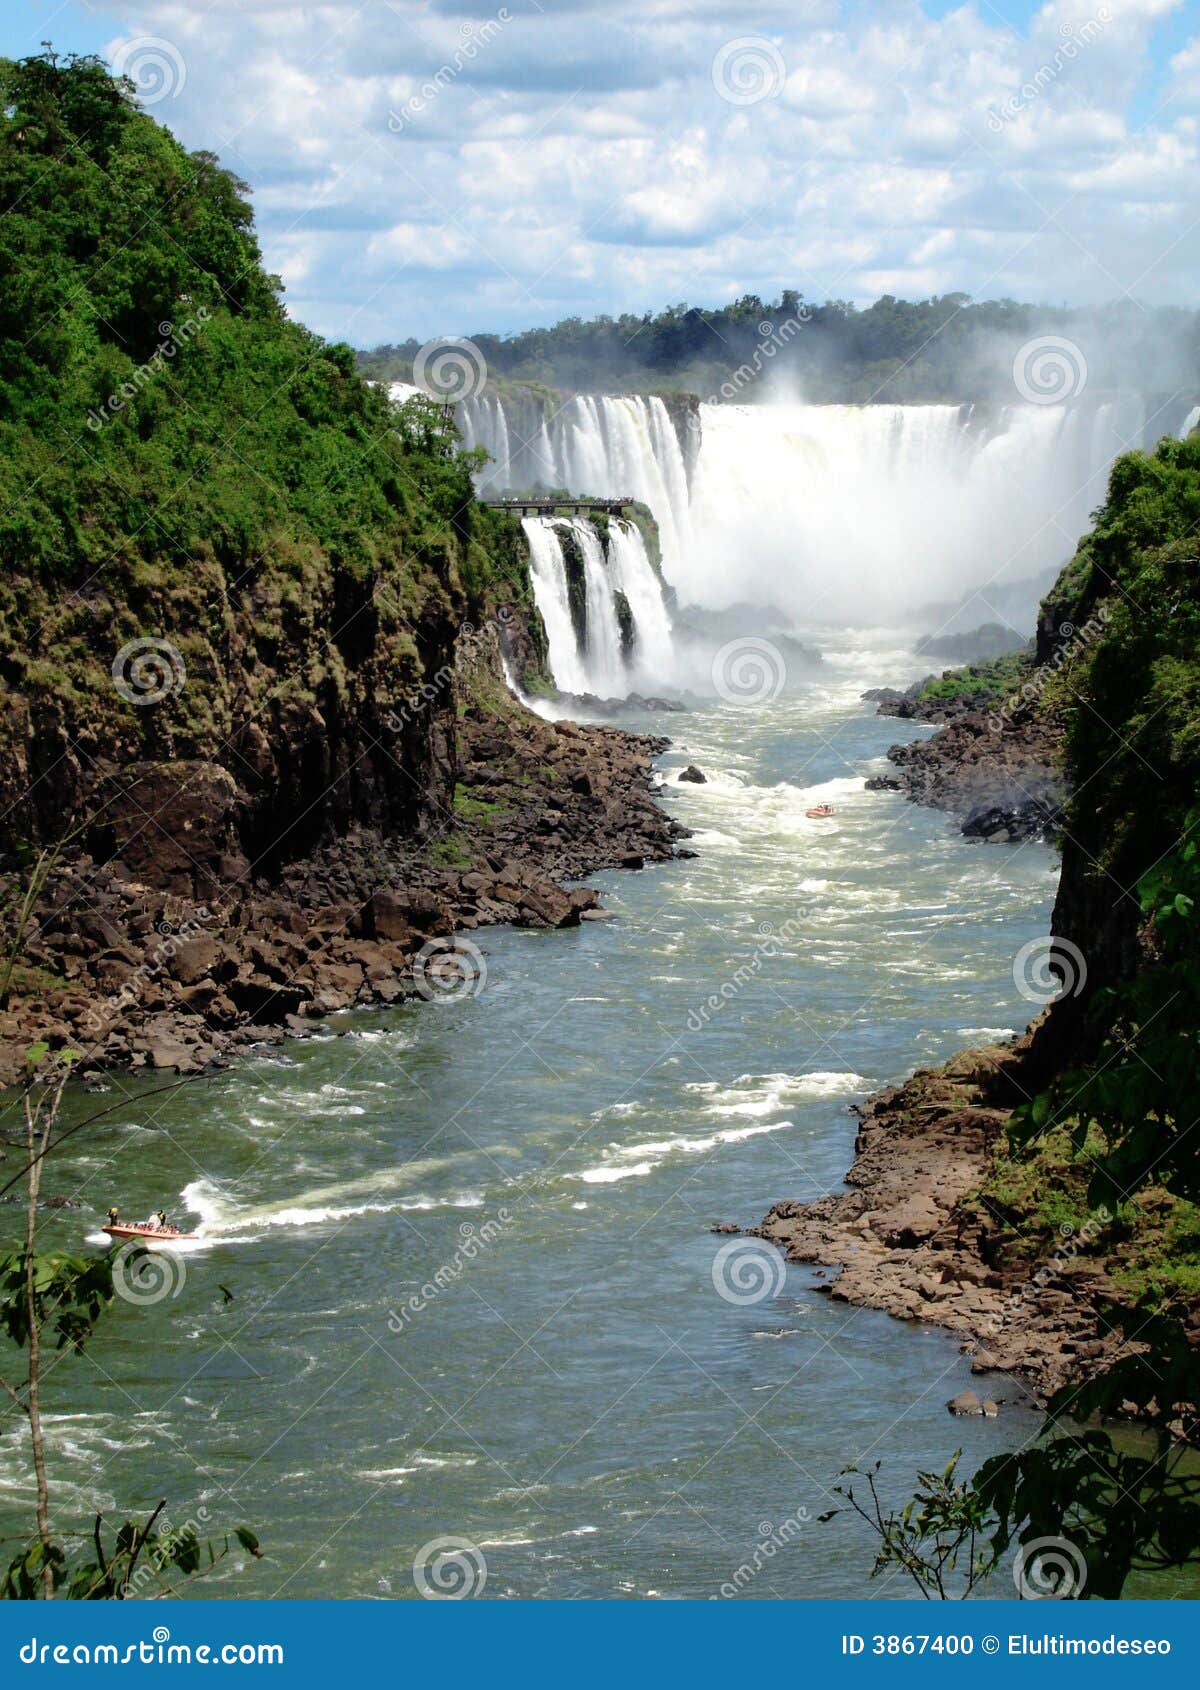 iguazu falls2